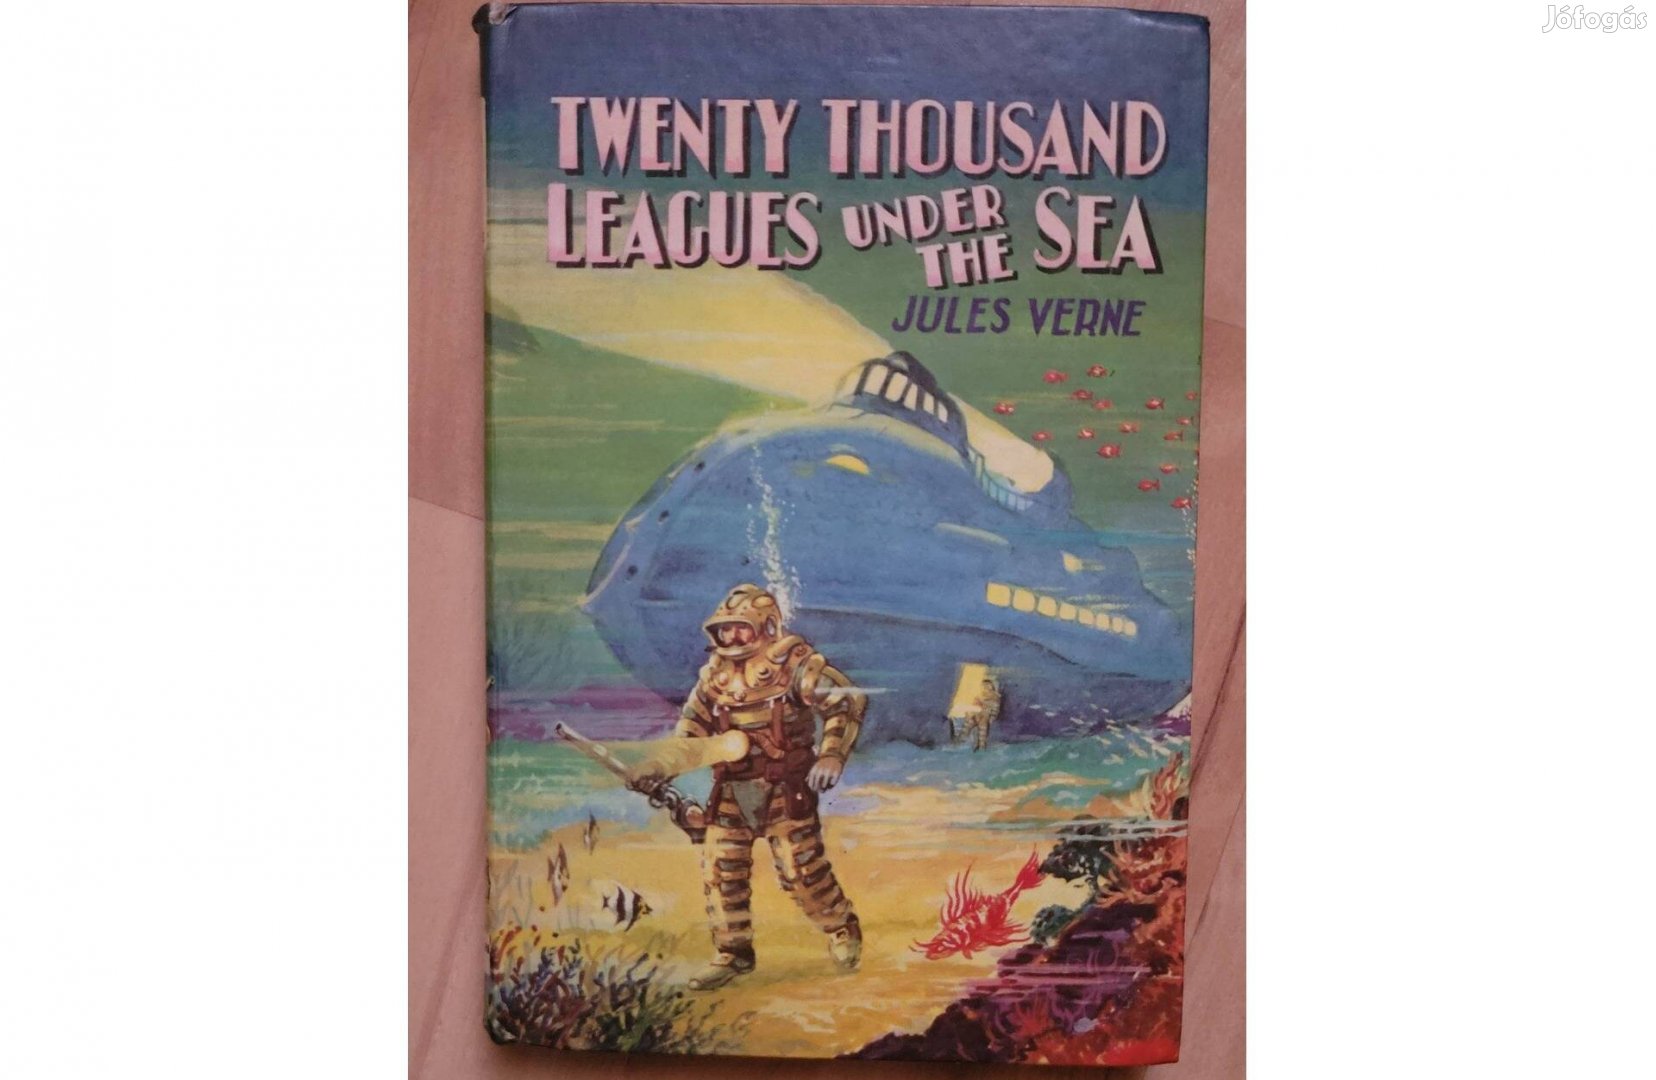 Twenty thousand leagues under the sea - 1975-ös kiadás